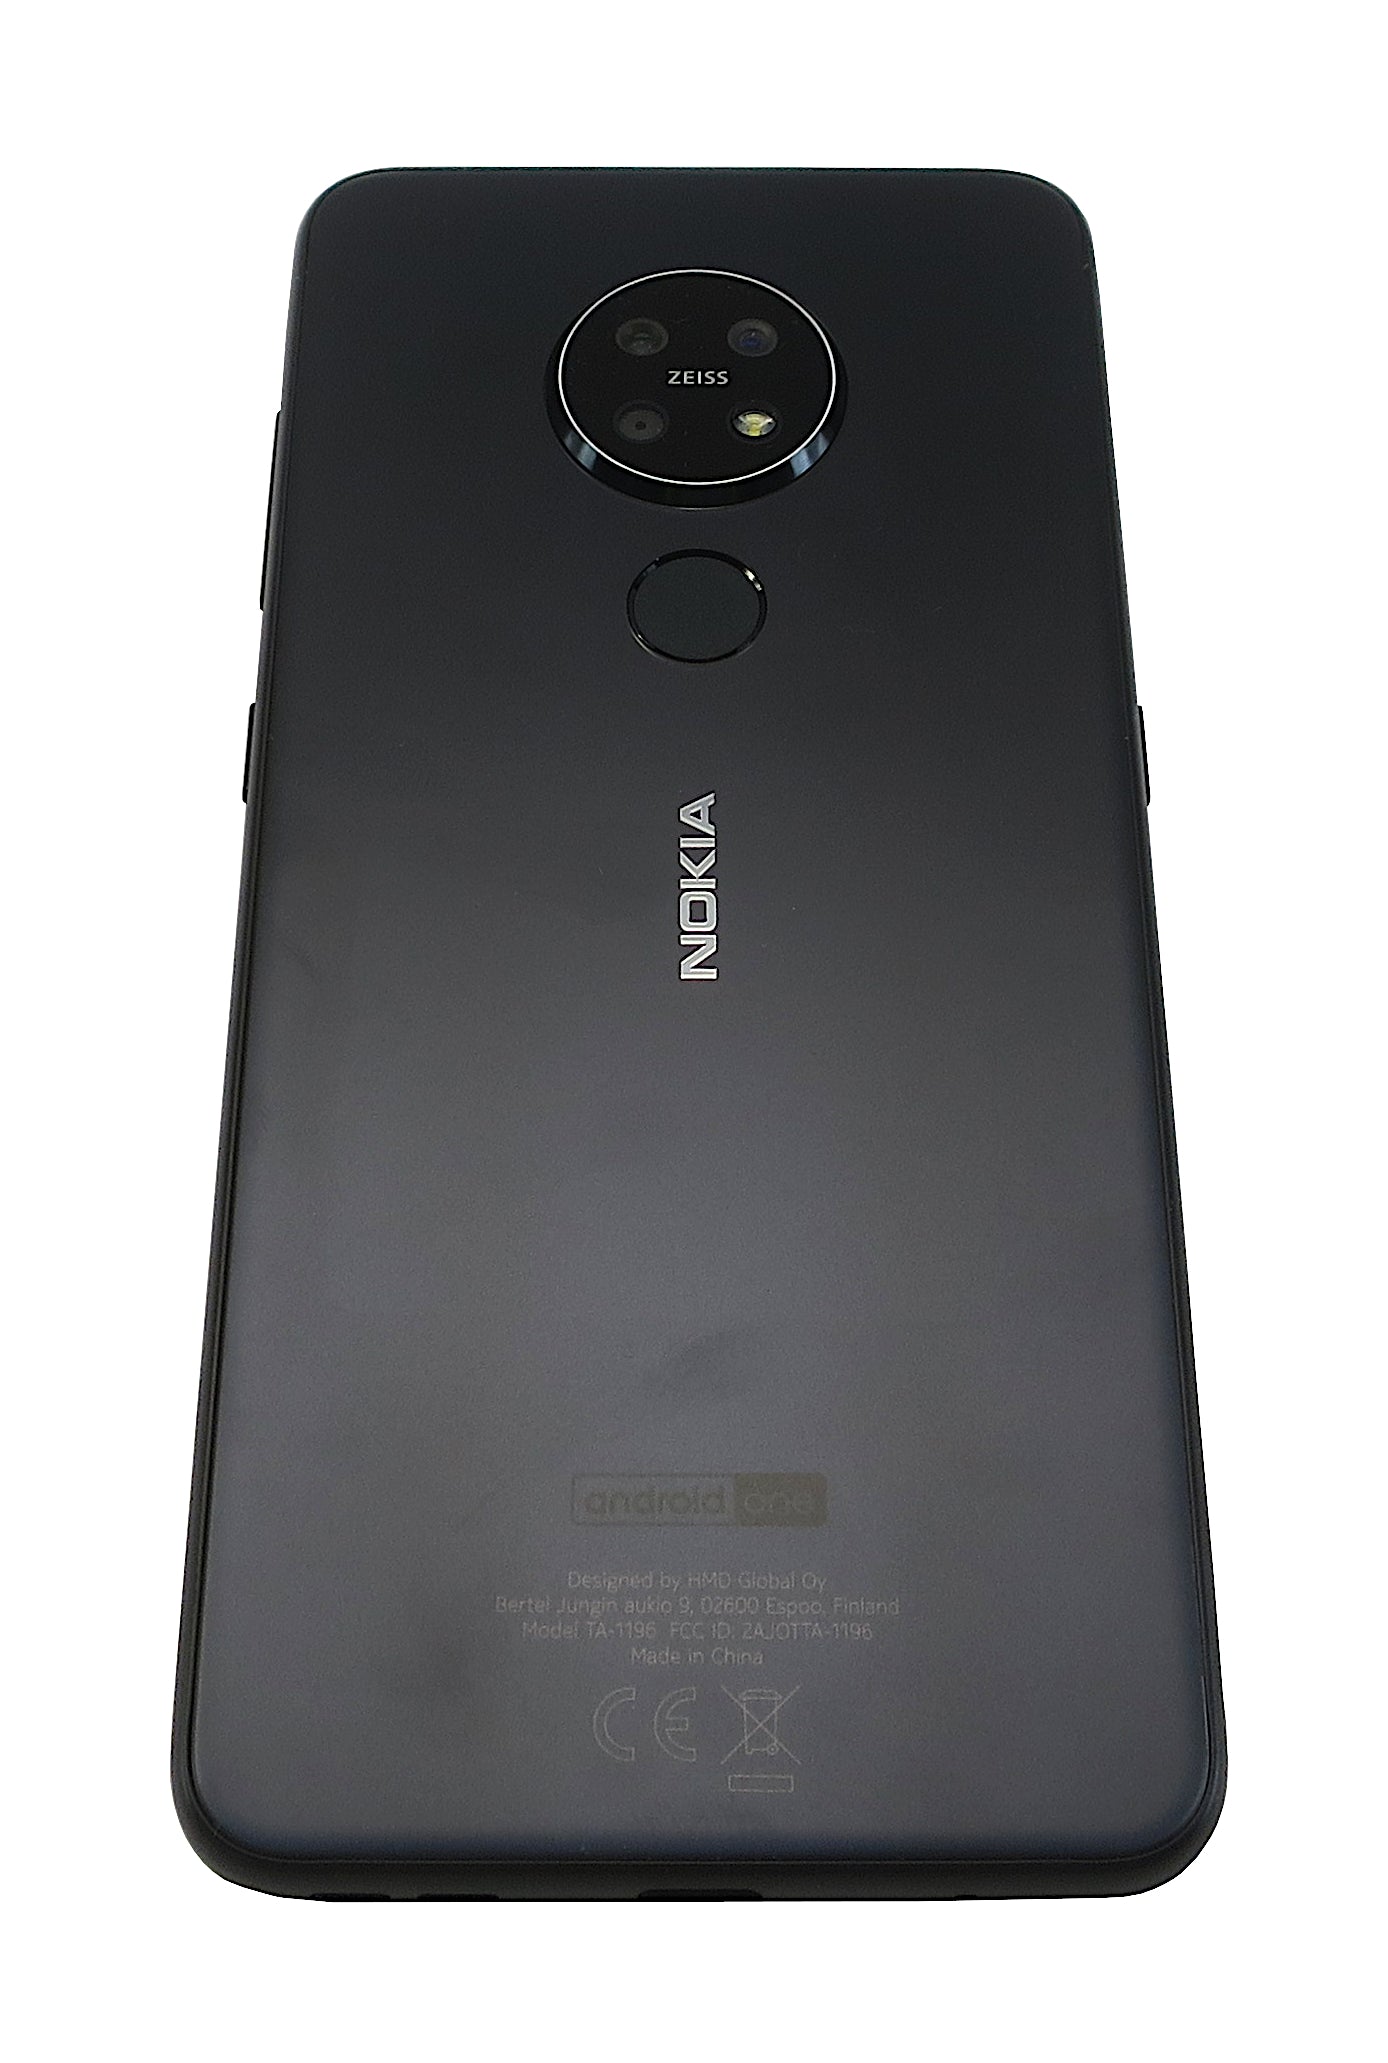 Nokia 7.2 Smartphone, 64GB, Dual Sim, Network Unlocked, Charcoal, TA-1196